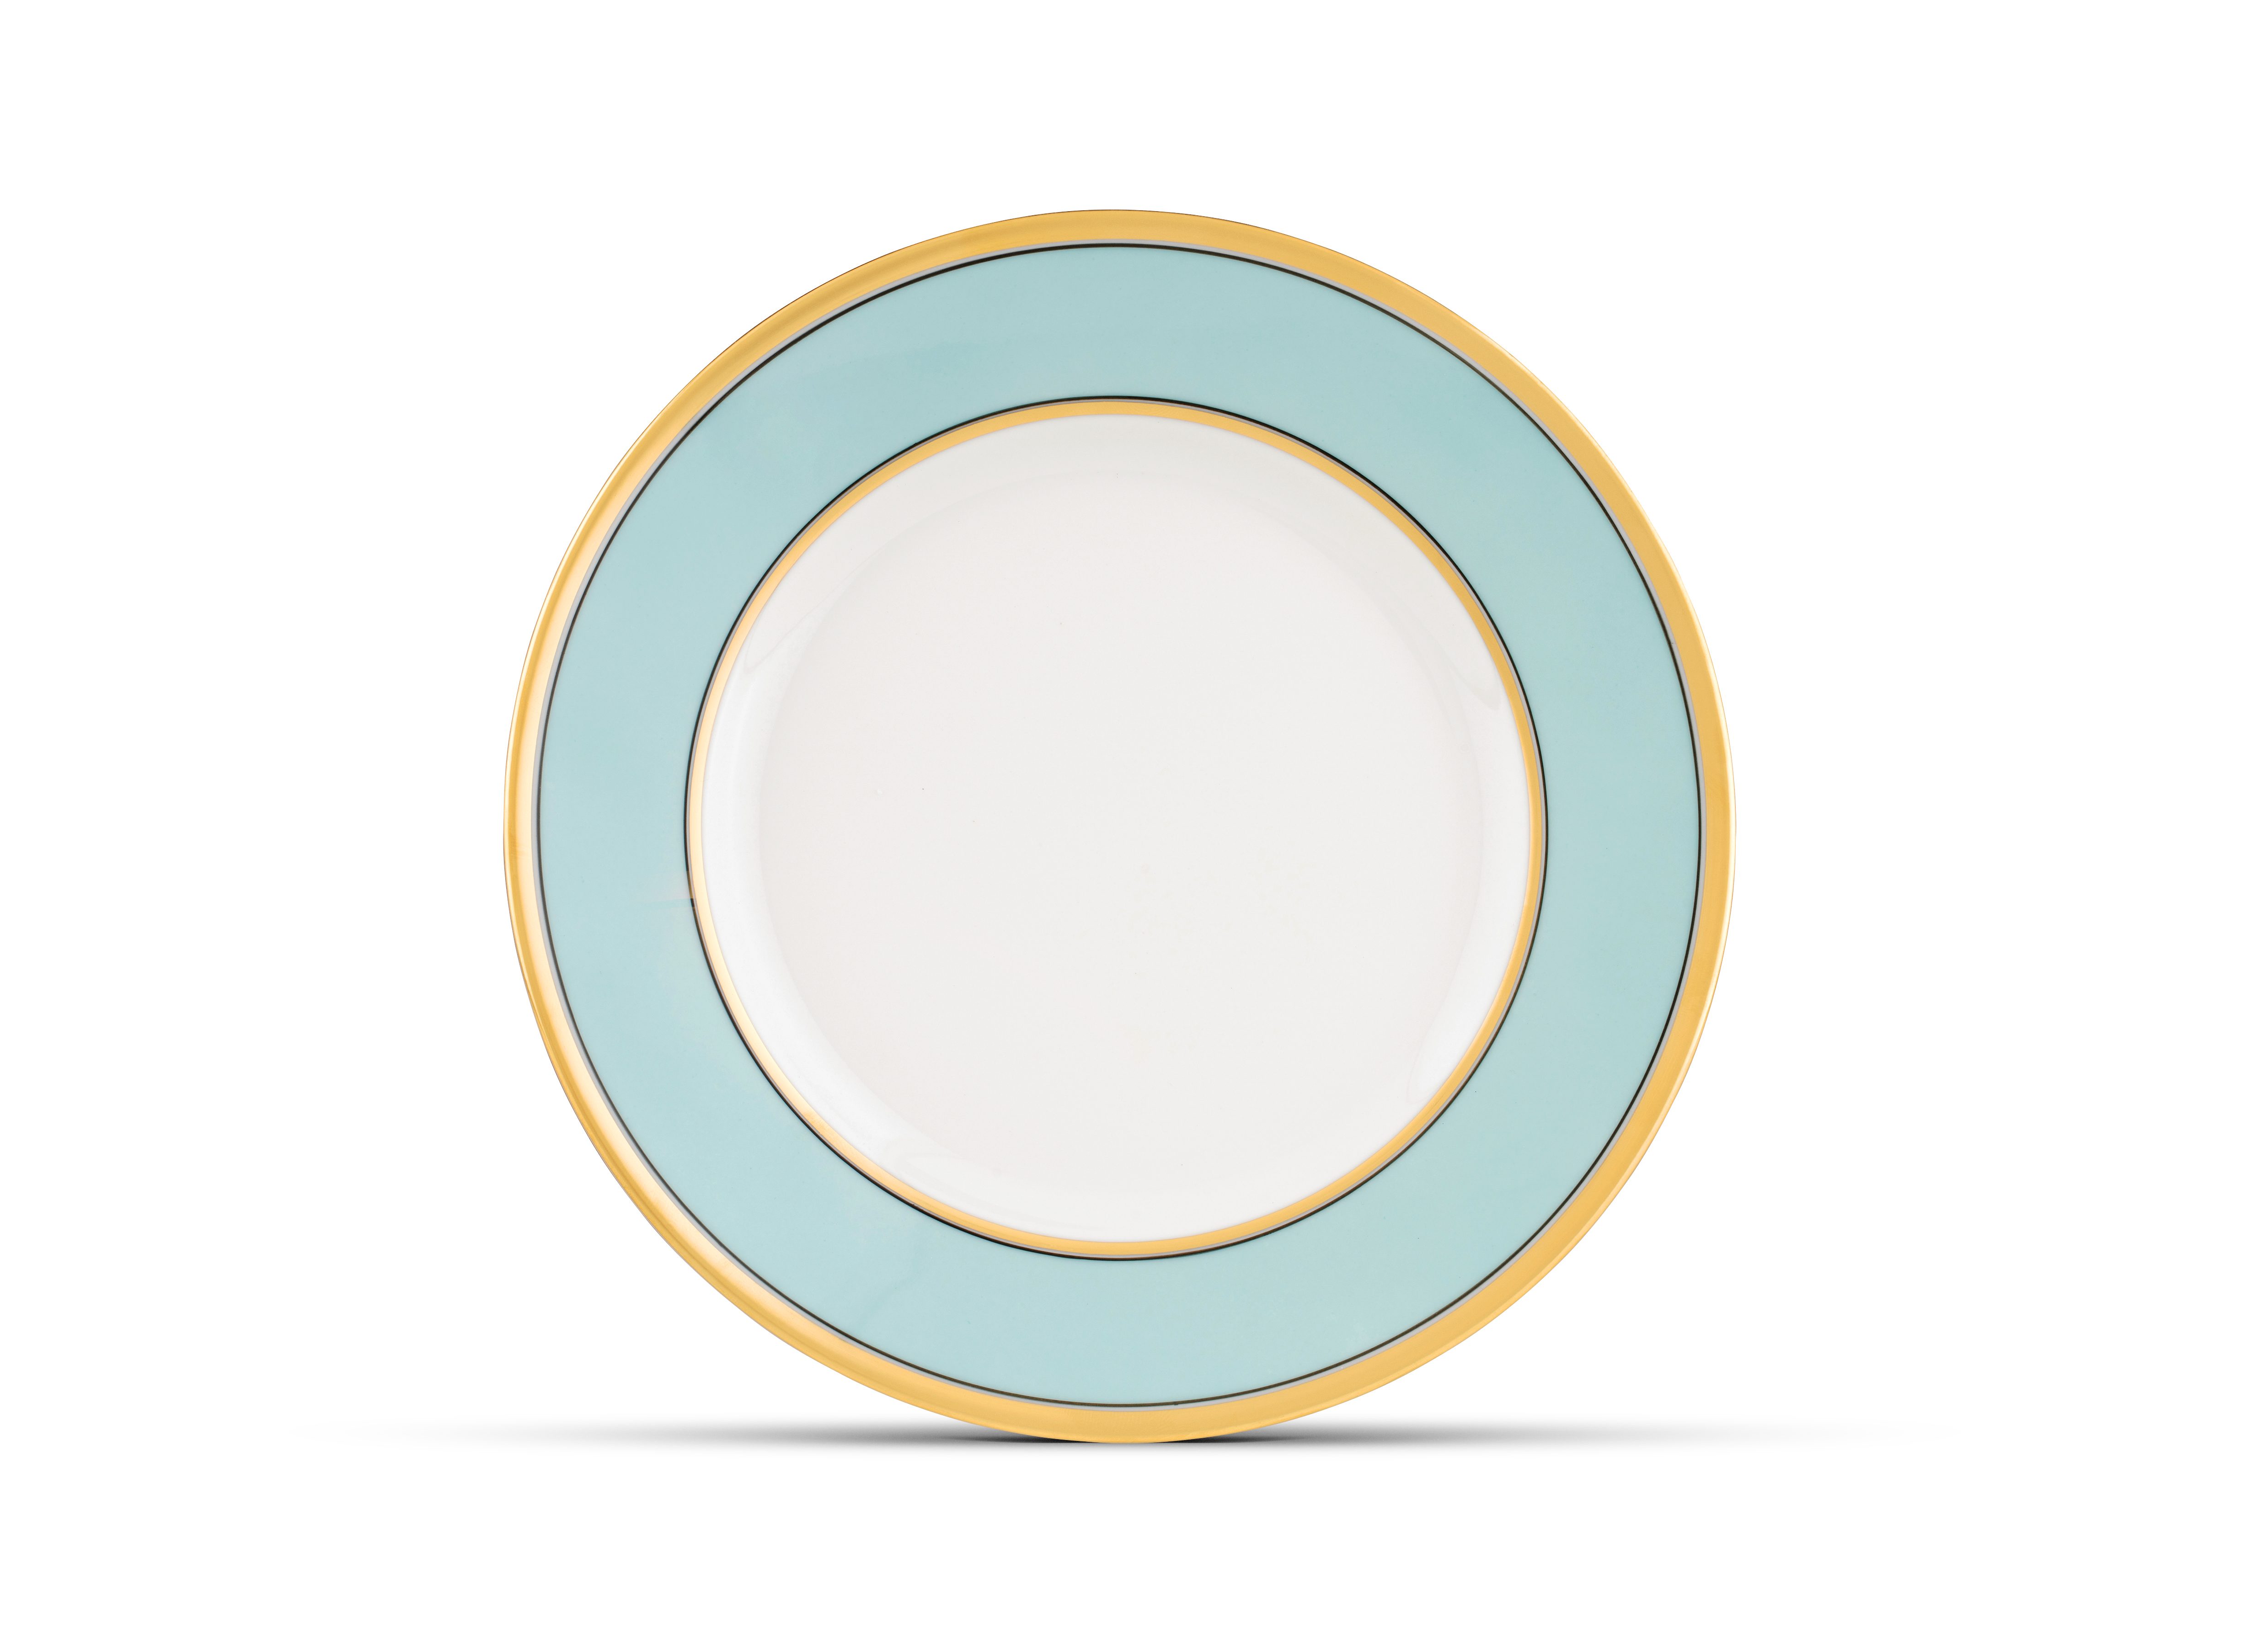 Indigo blue dessert plates| Contessa | GINORI 1735